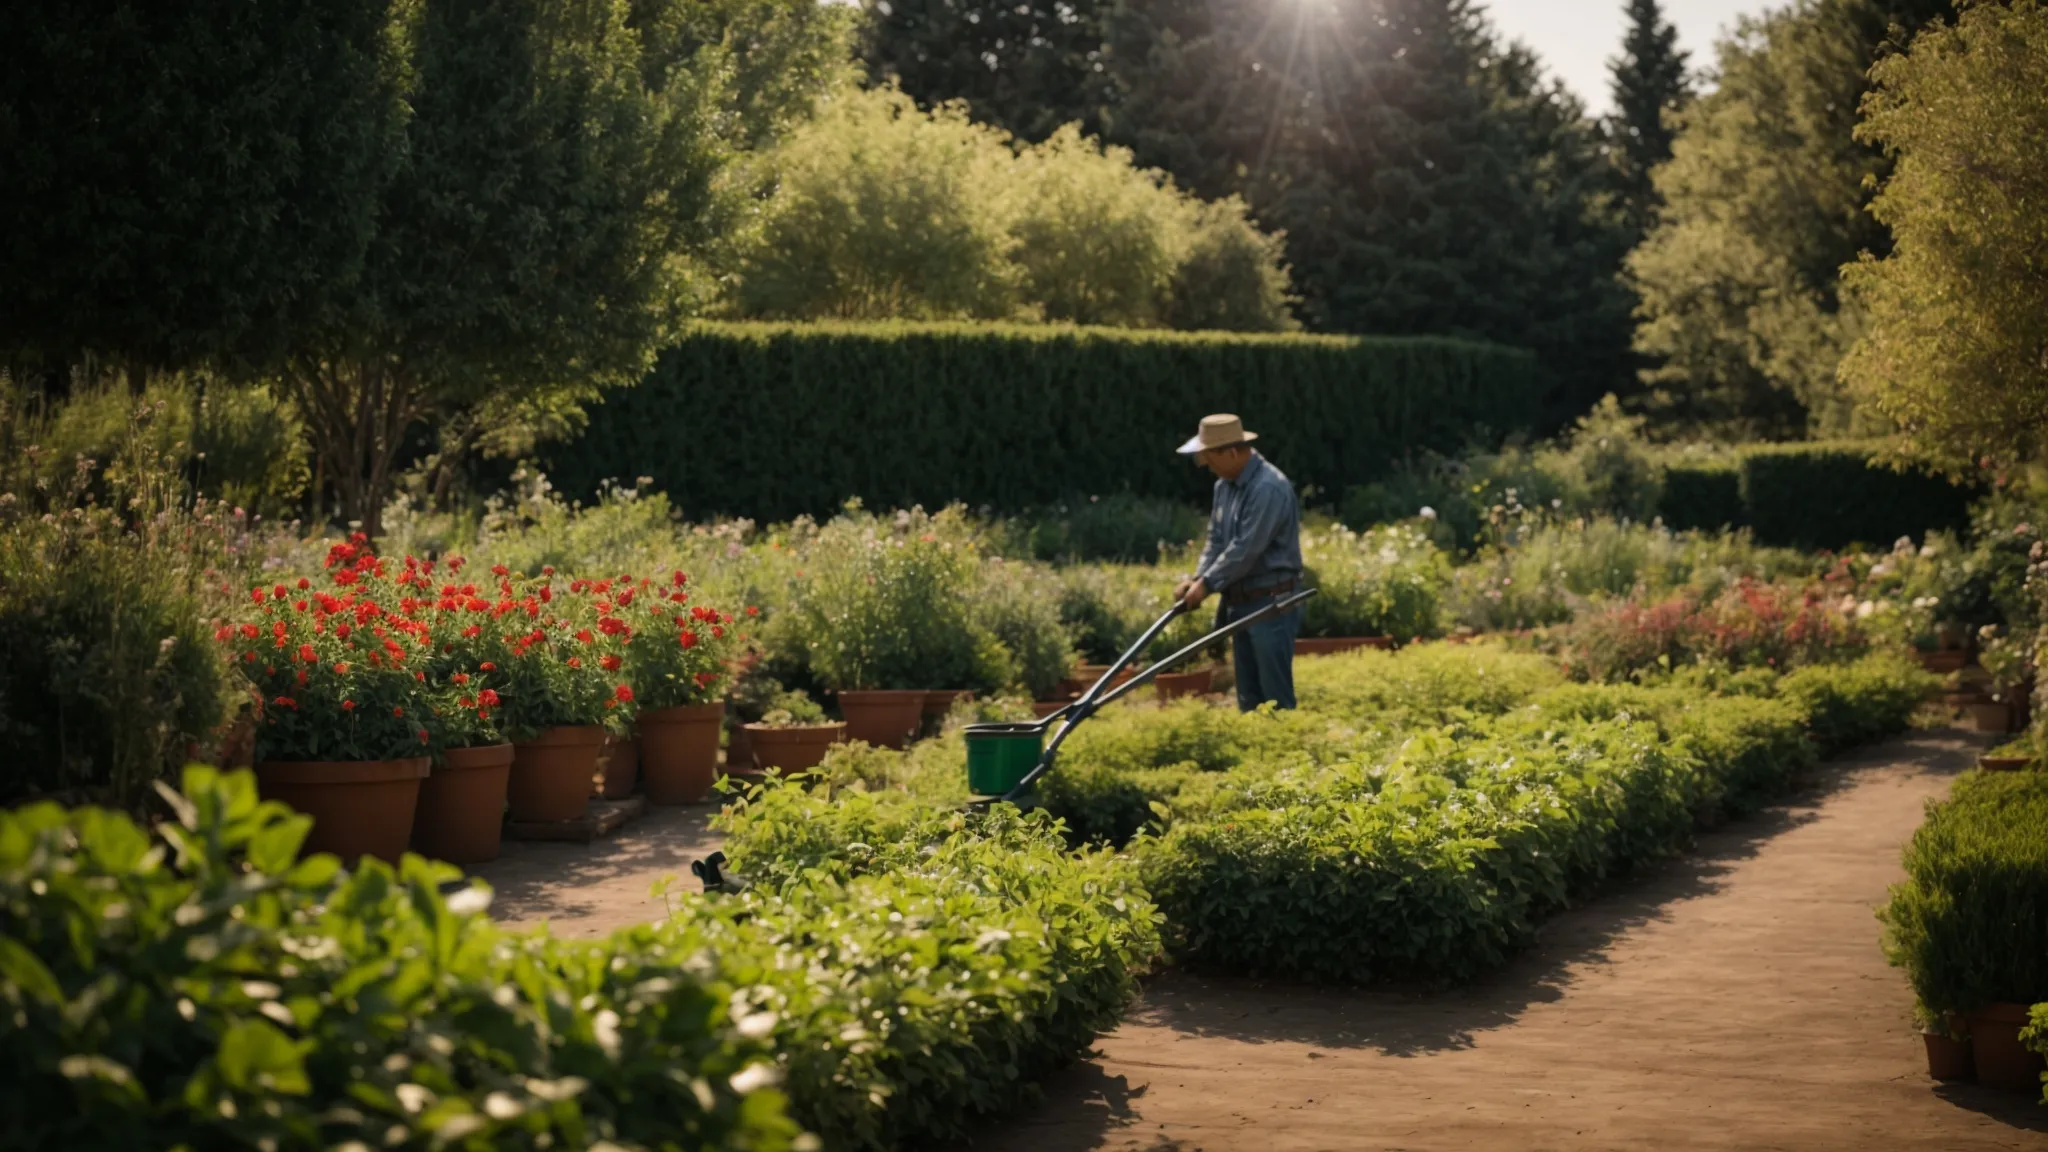 a lone gardener meticulously pruning a vast, flourishing garden under the bright afternoon sun.